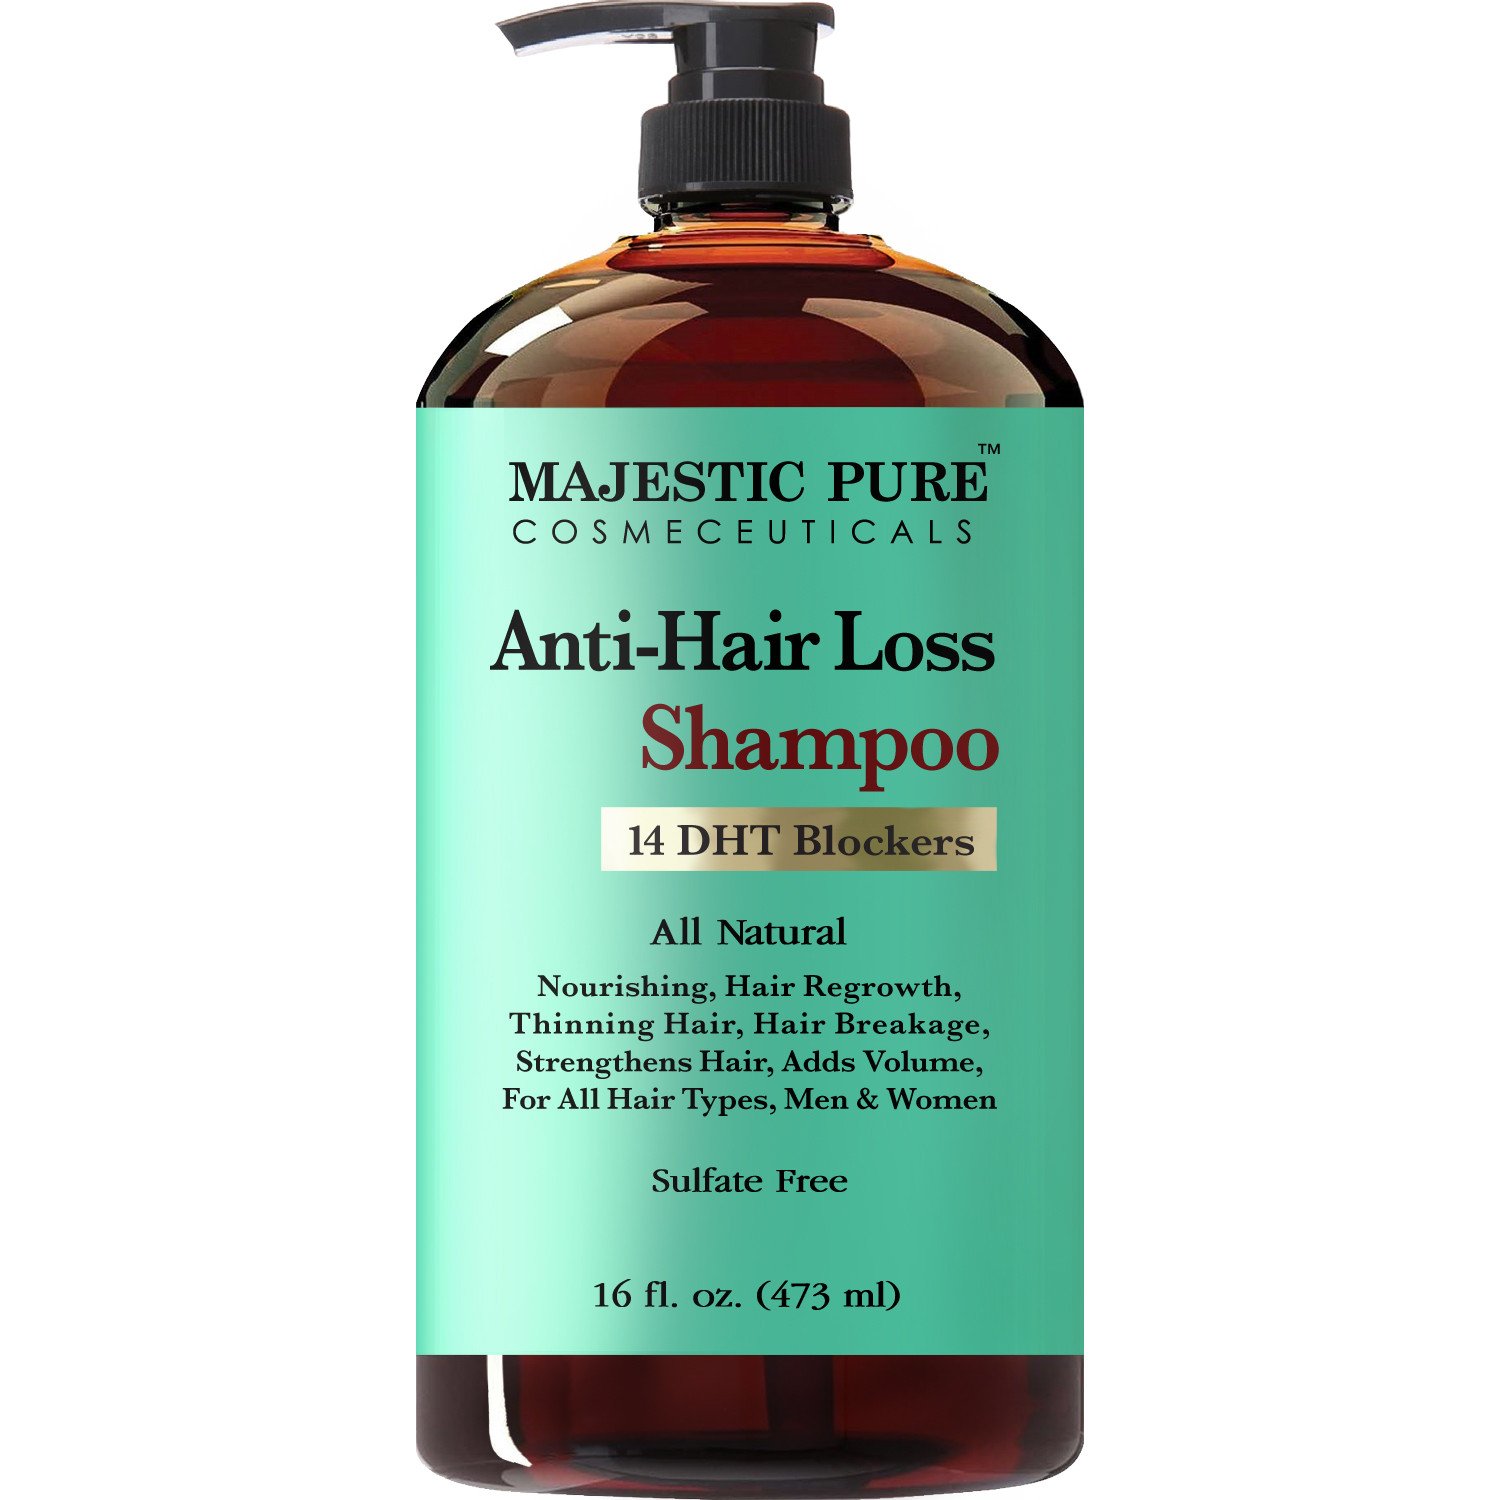 Shampoo to help with hair loss